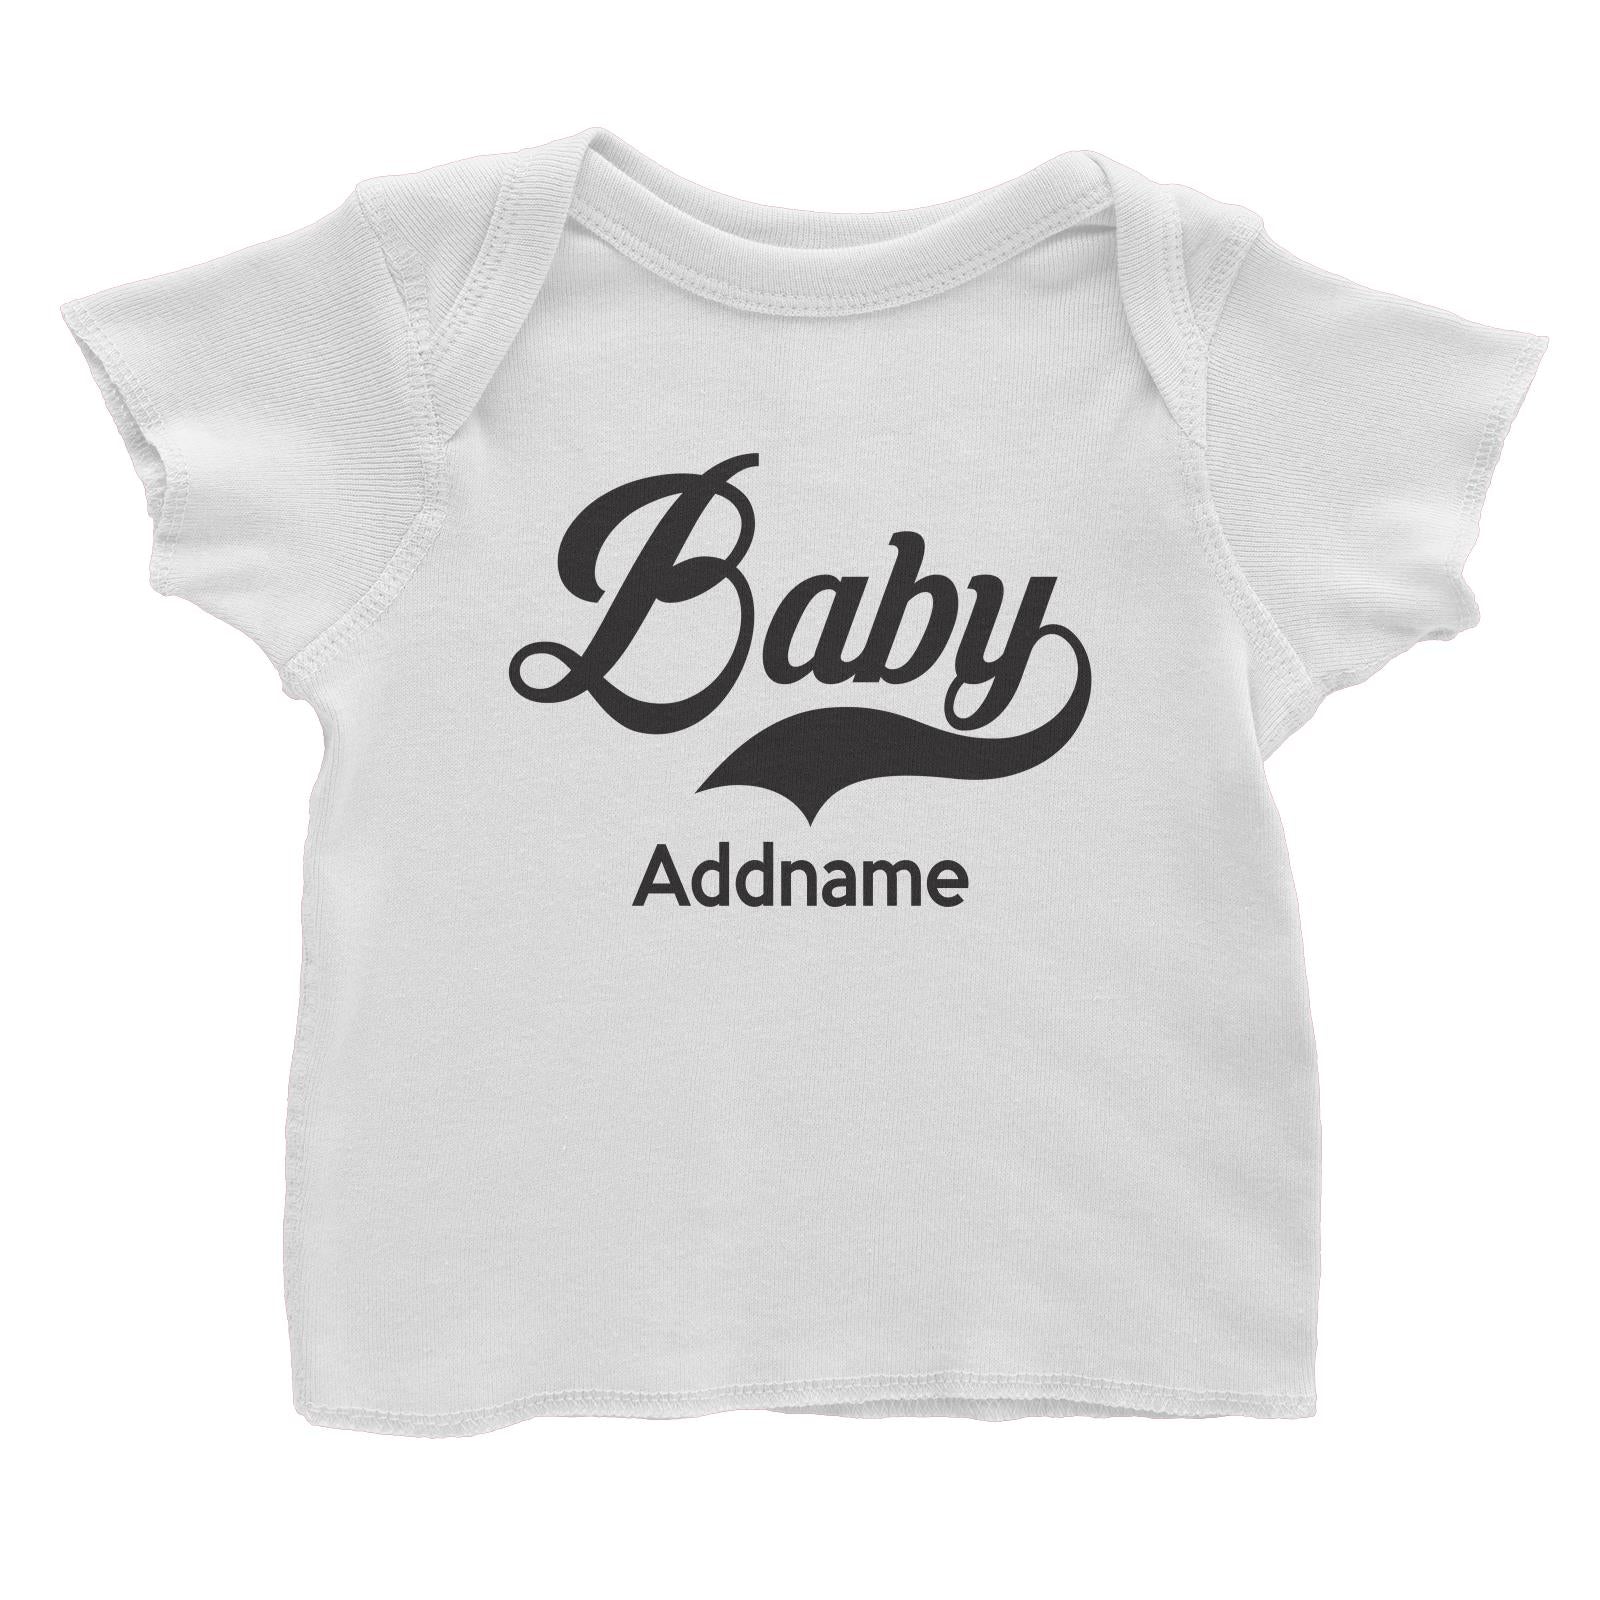 Retro Baby Addname Baby T-Shirt